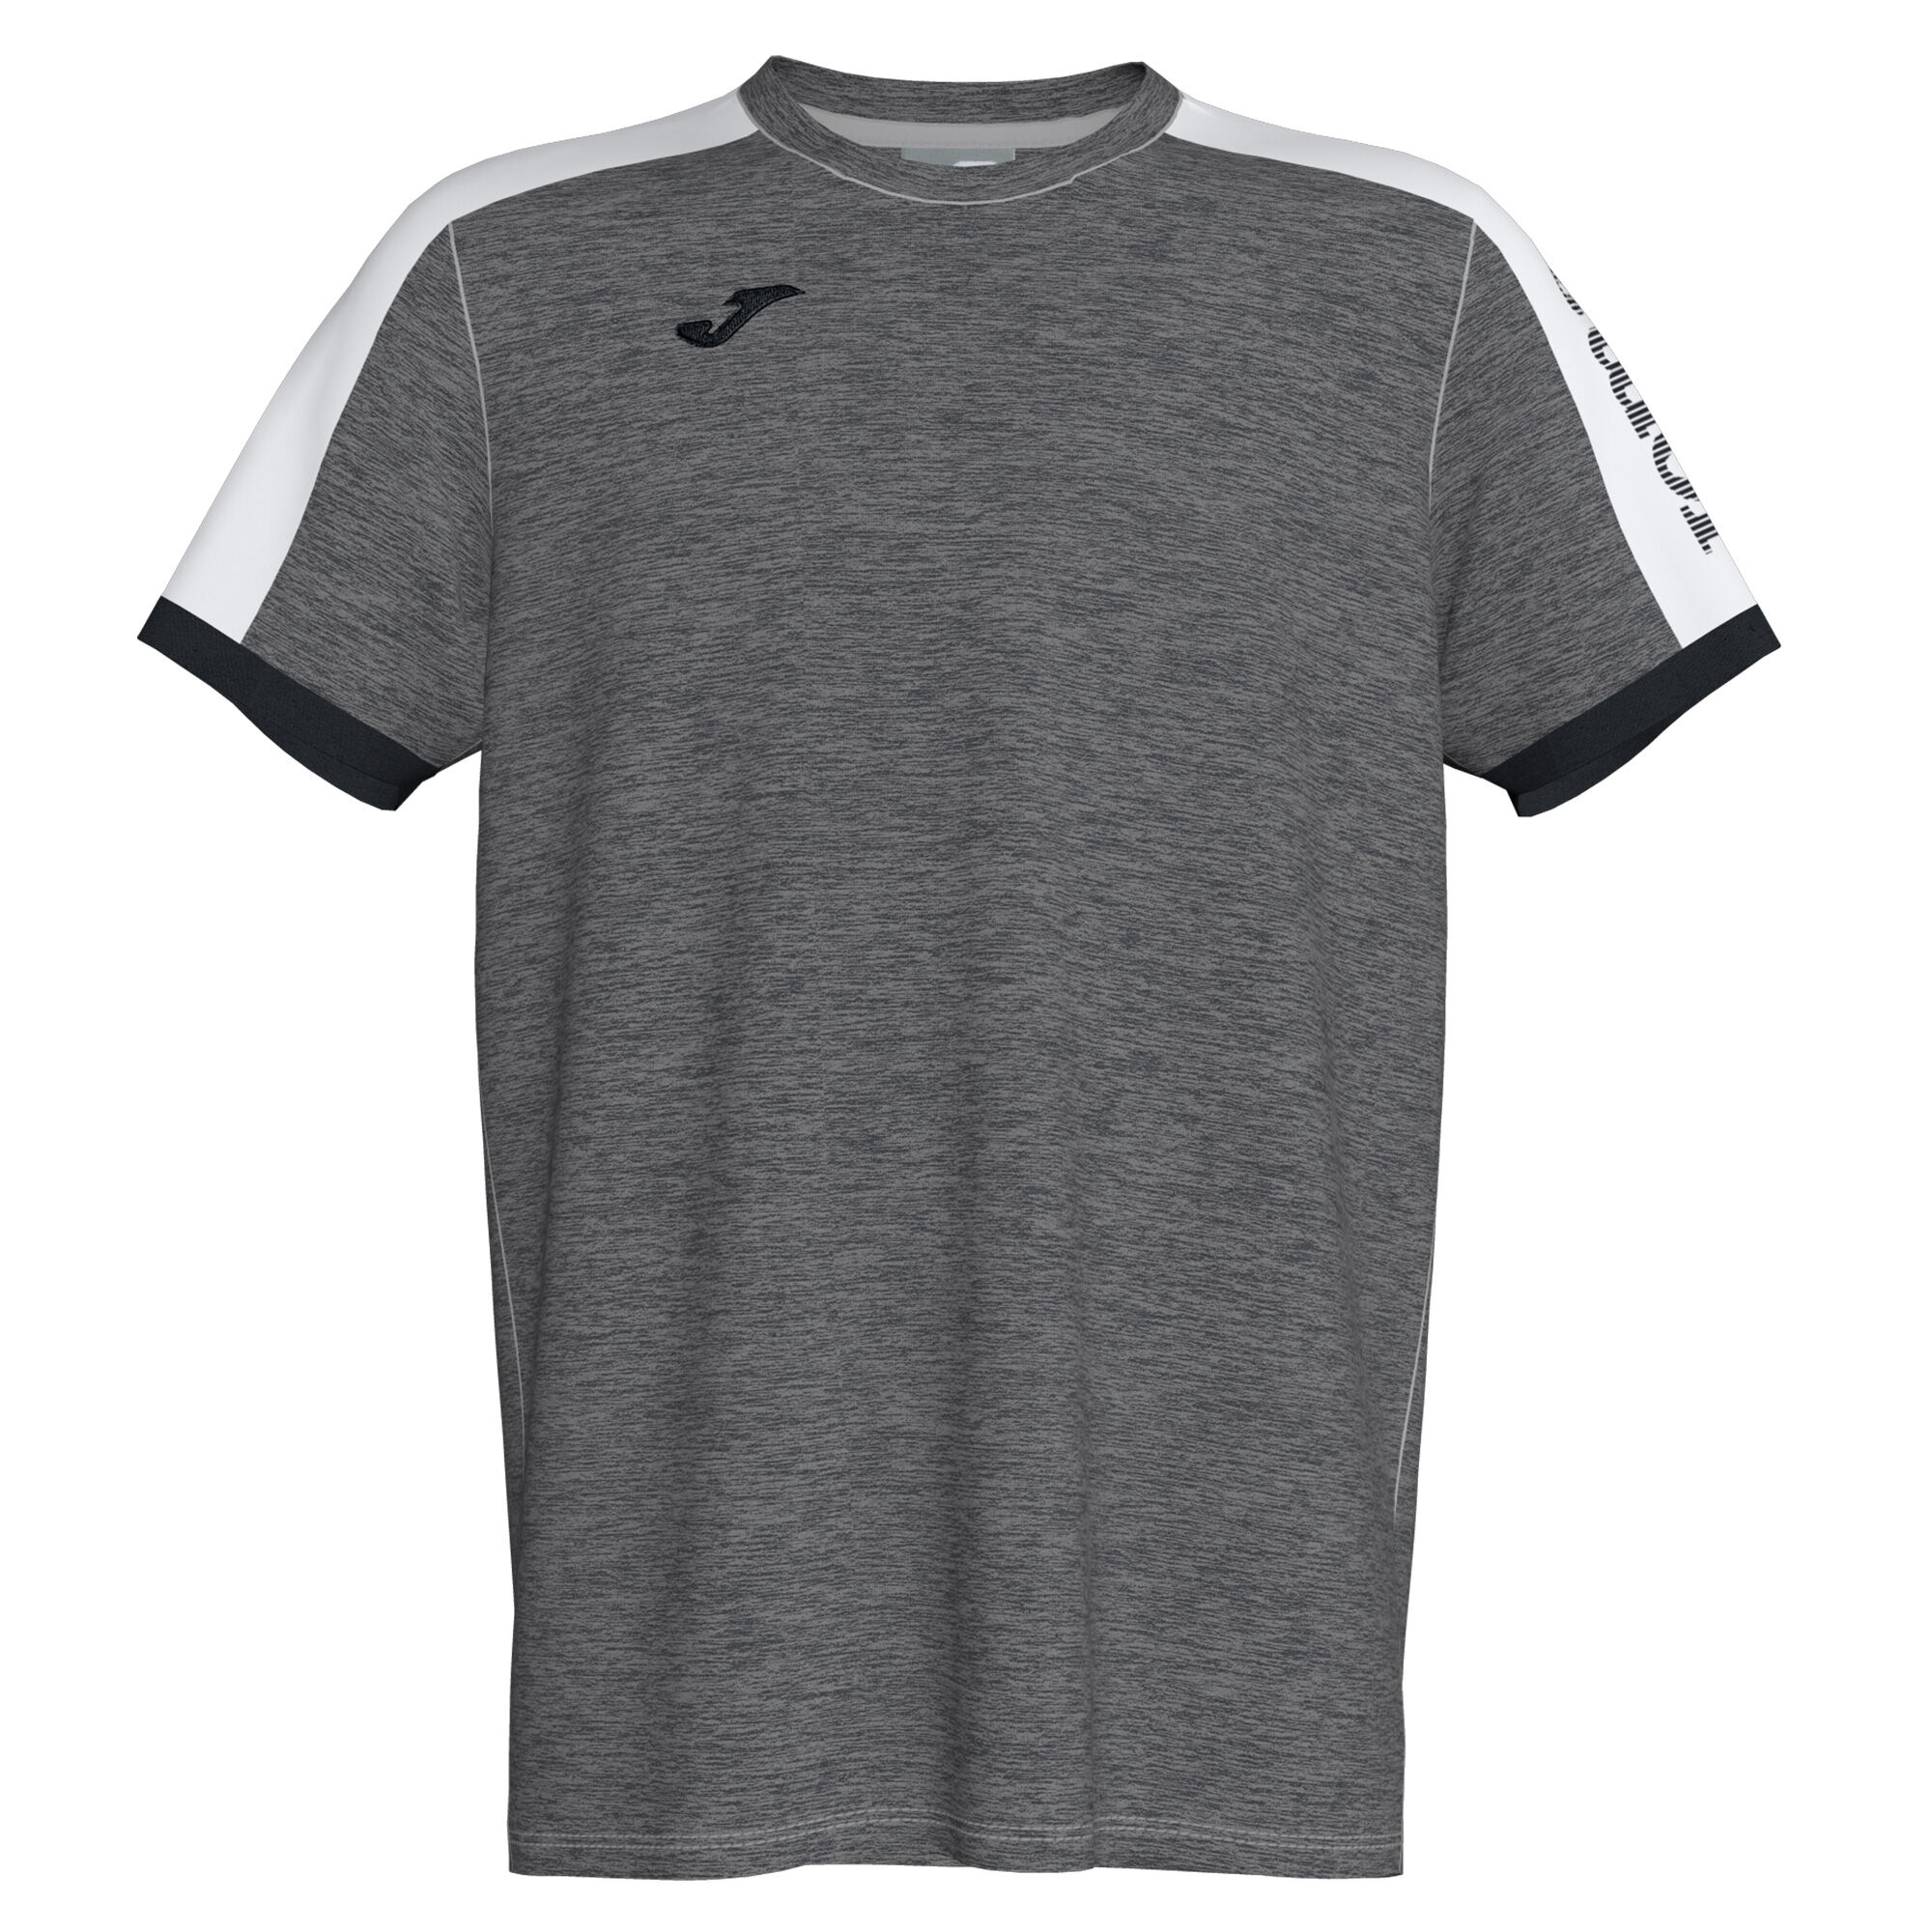 Camiseta manga corta hombre Escanu antracita gris melange